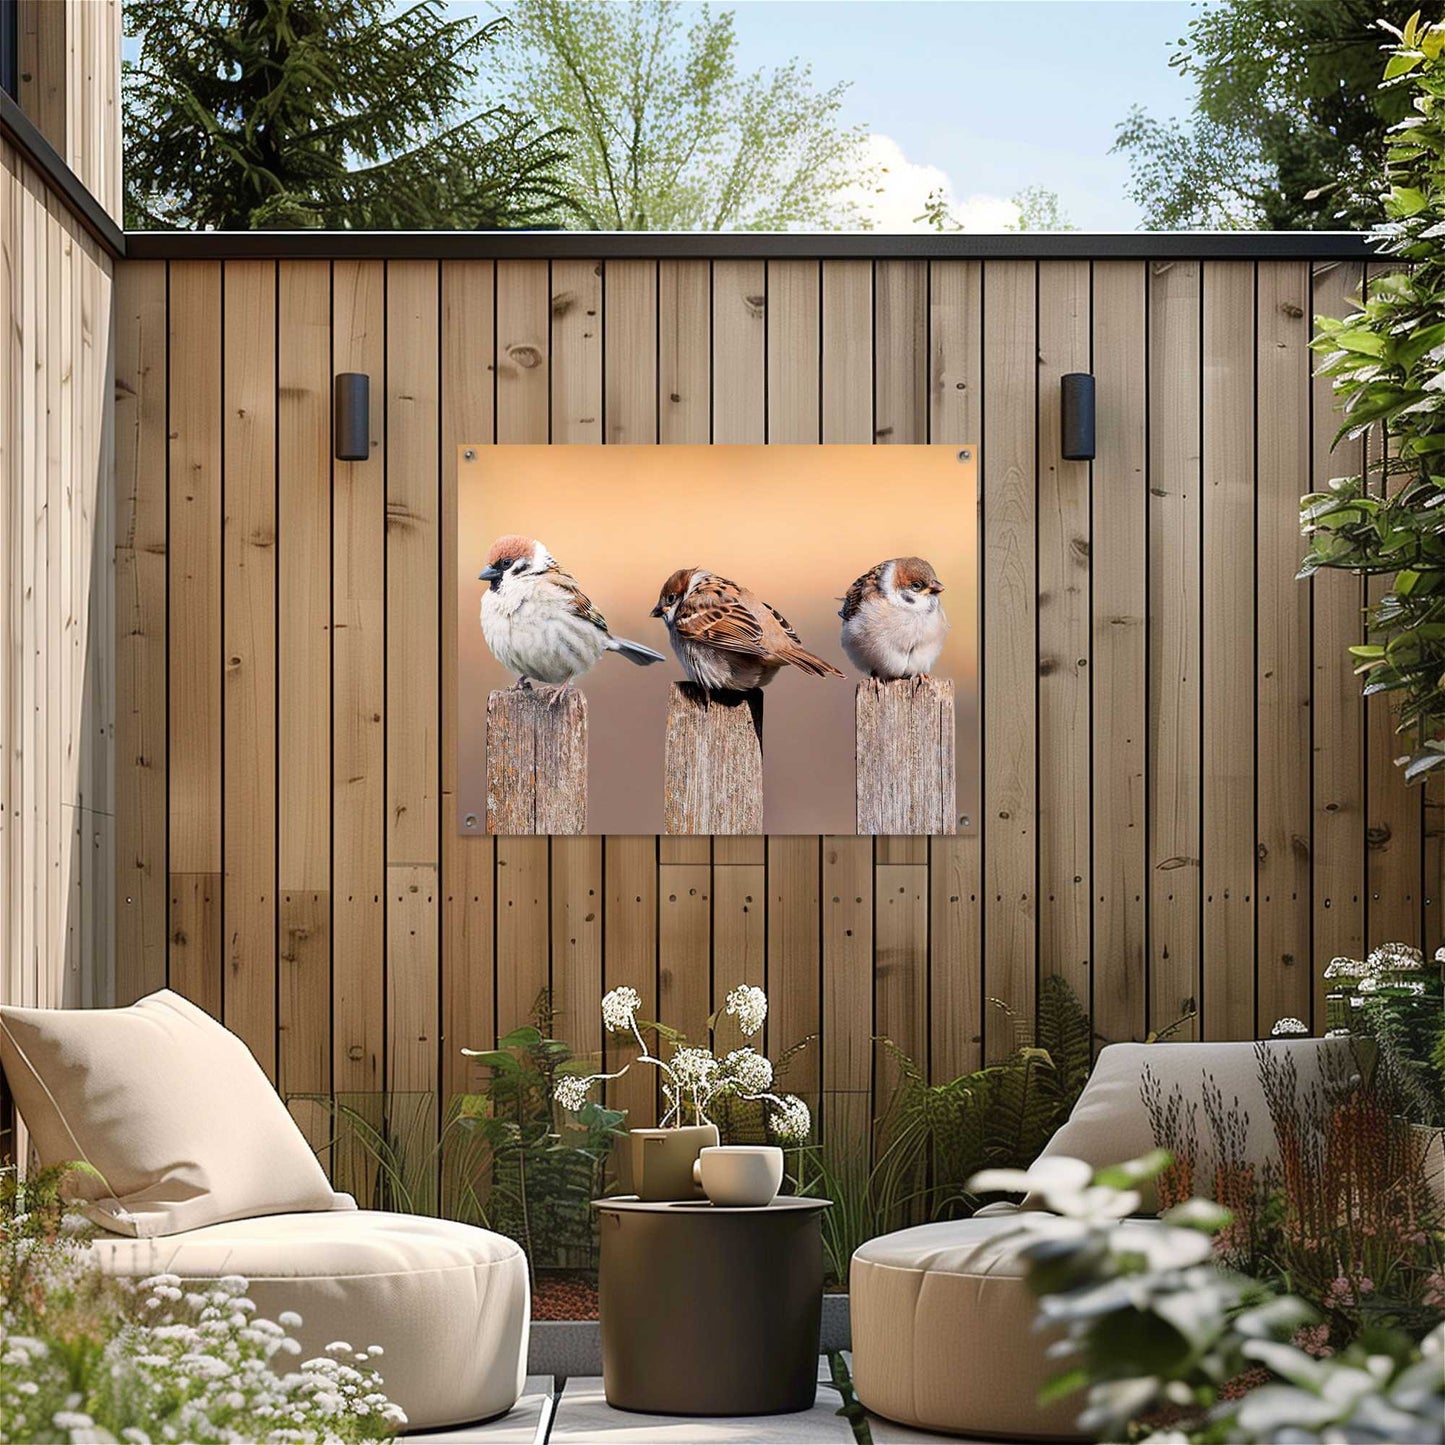 Outdoor Art Sparrows 50x70